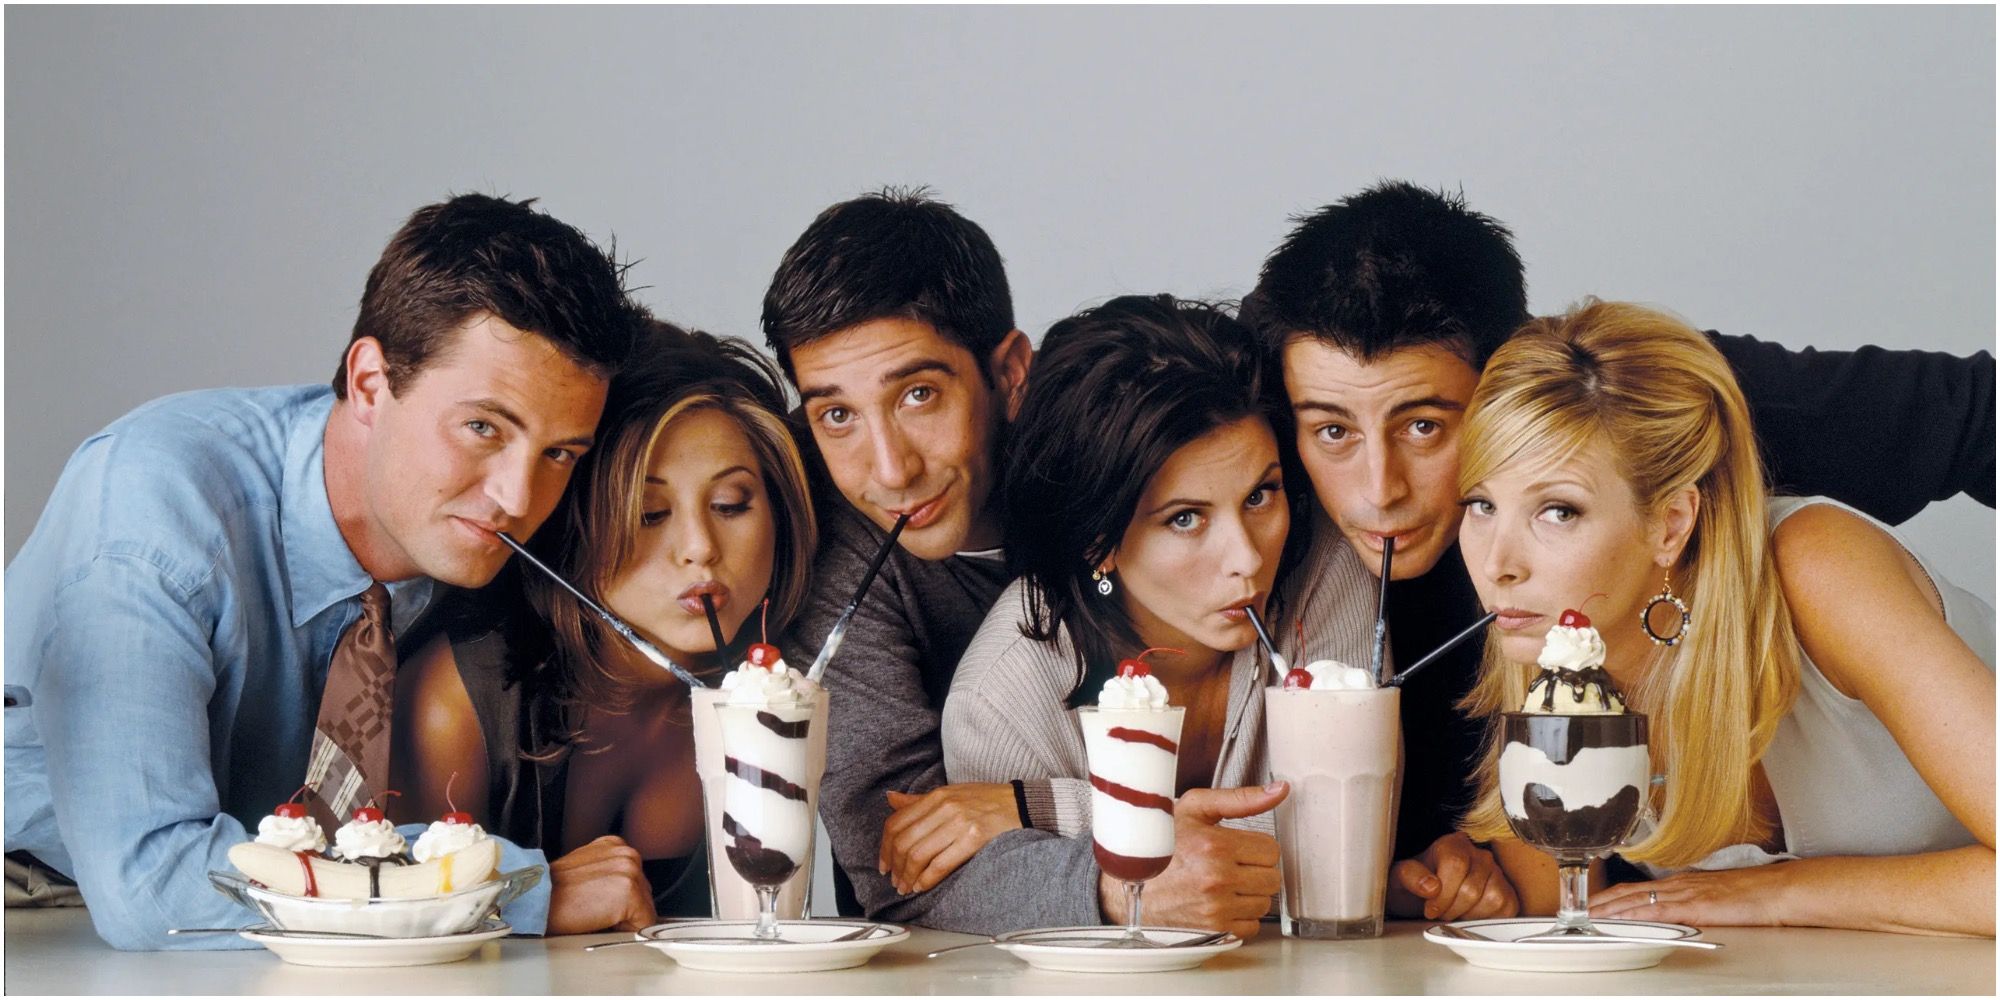 Friends Sitcom Picture Of The Cast Members Matt Leblanc Matthew Perry Jennifer Aniston Courteney Cox Lisa Kudrow and David schwimmer Drinking Milkshakes And Eating Ice Cream